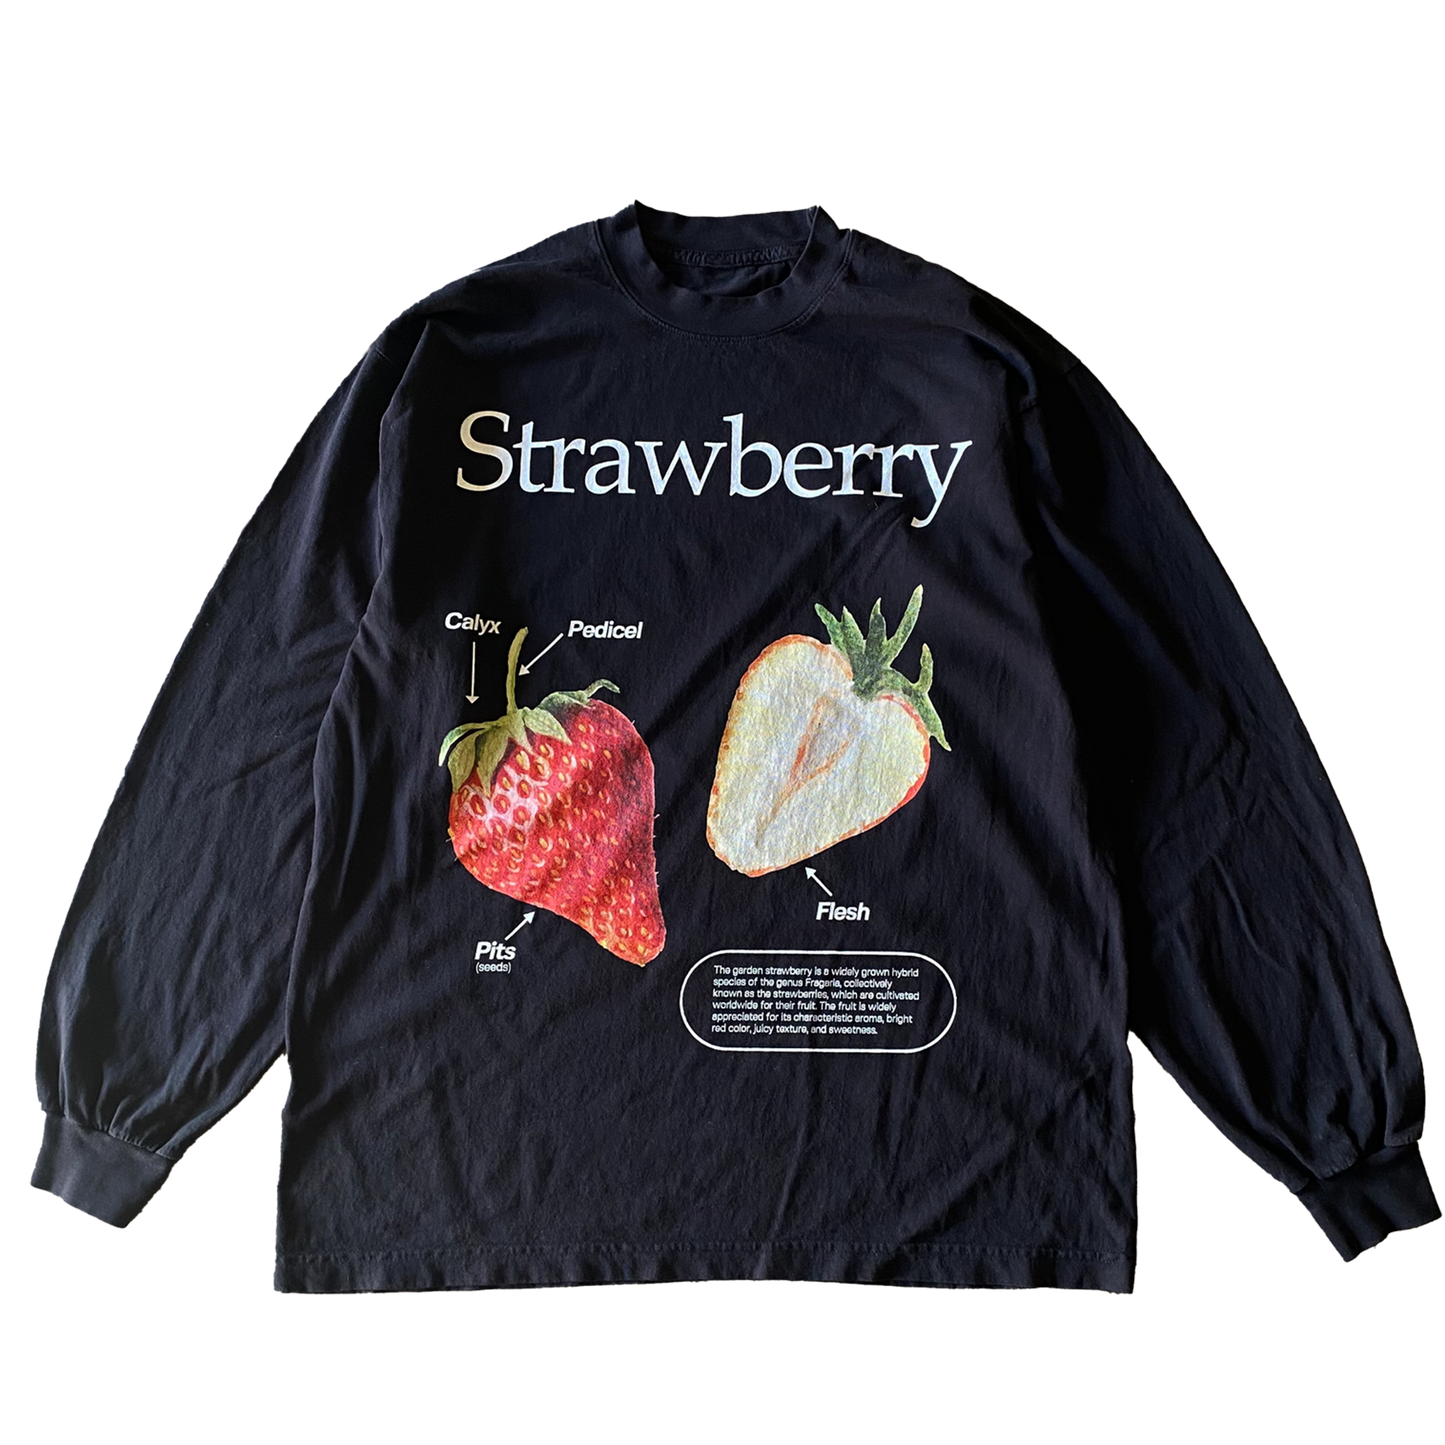 Strawberry v2 L/S